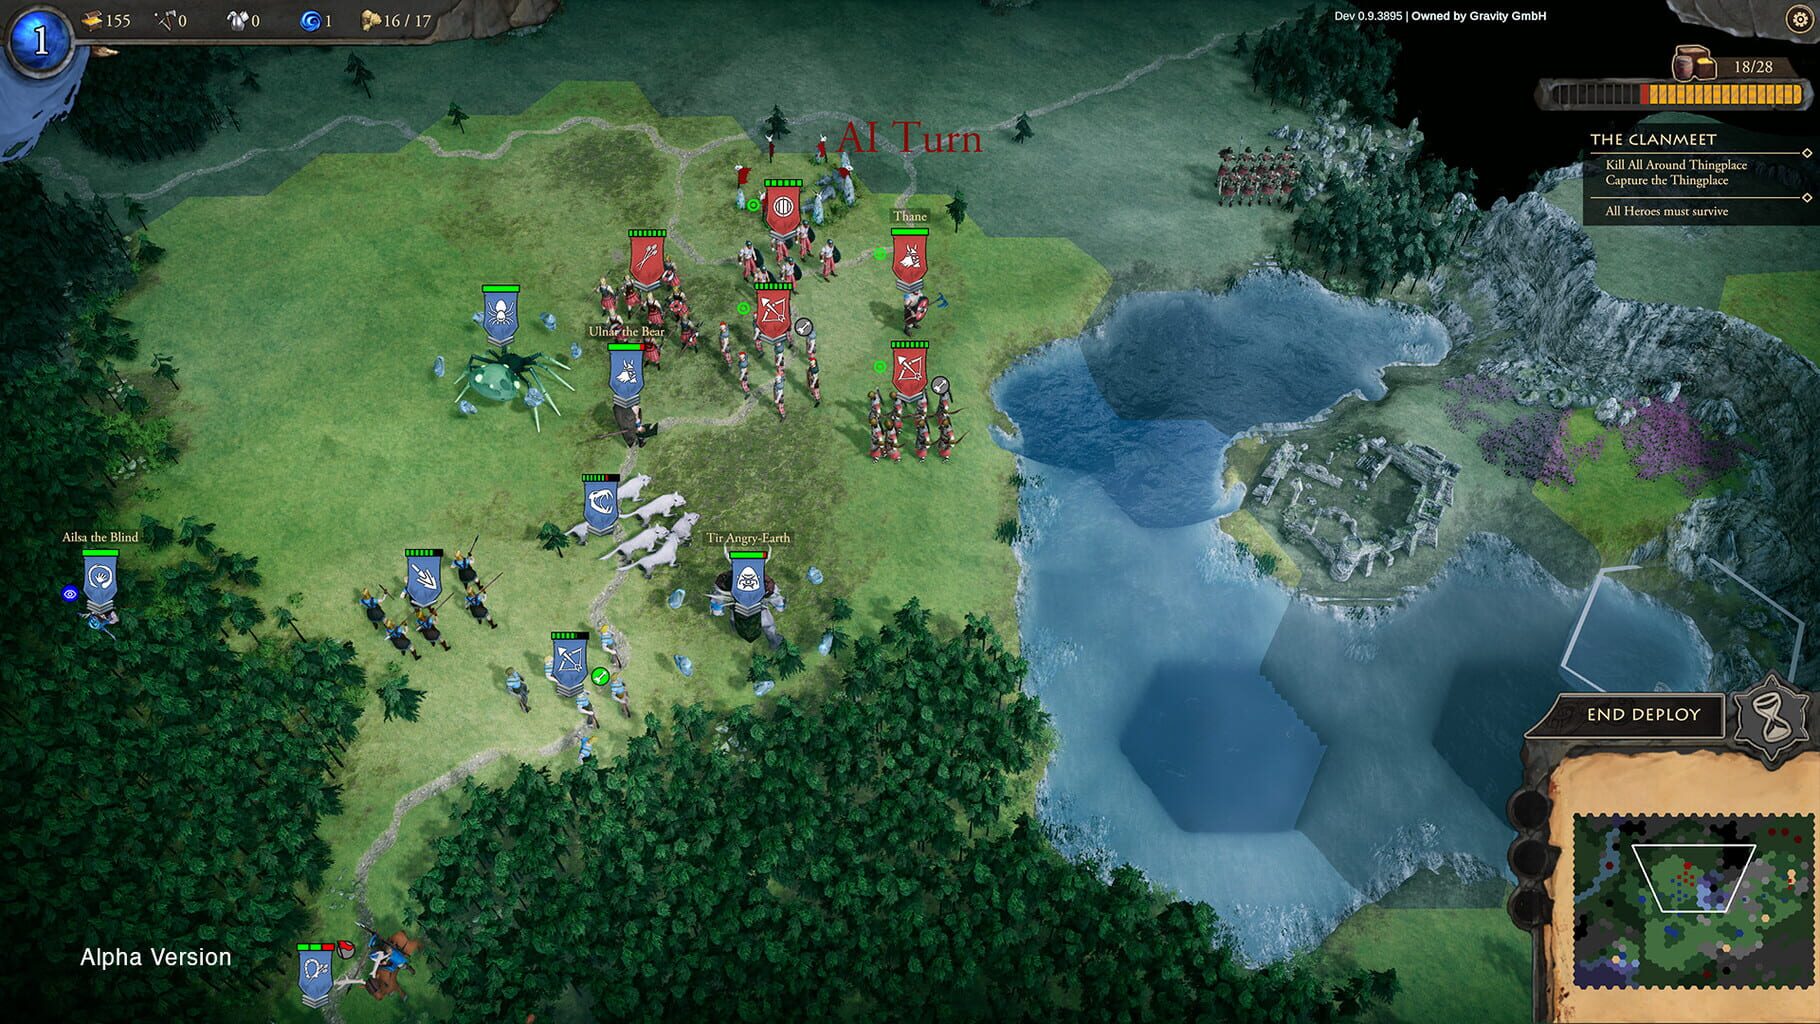 Fantasy General II: Invasion screenshot